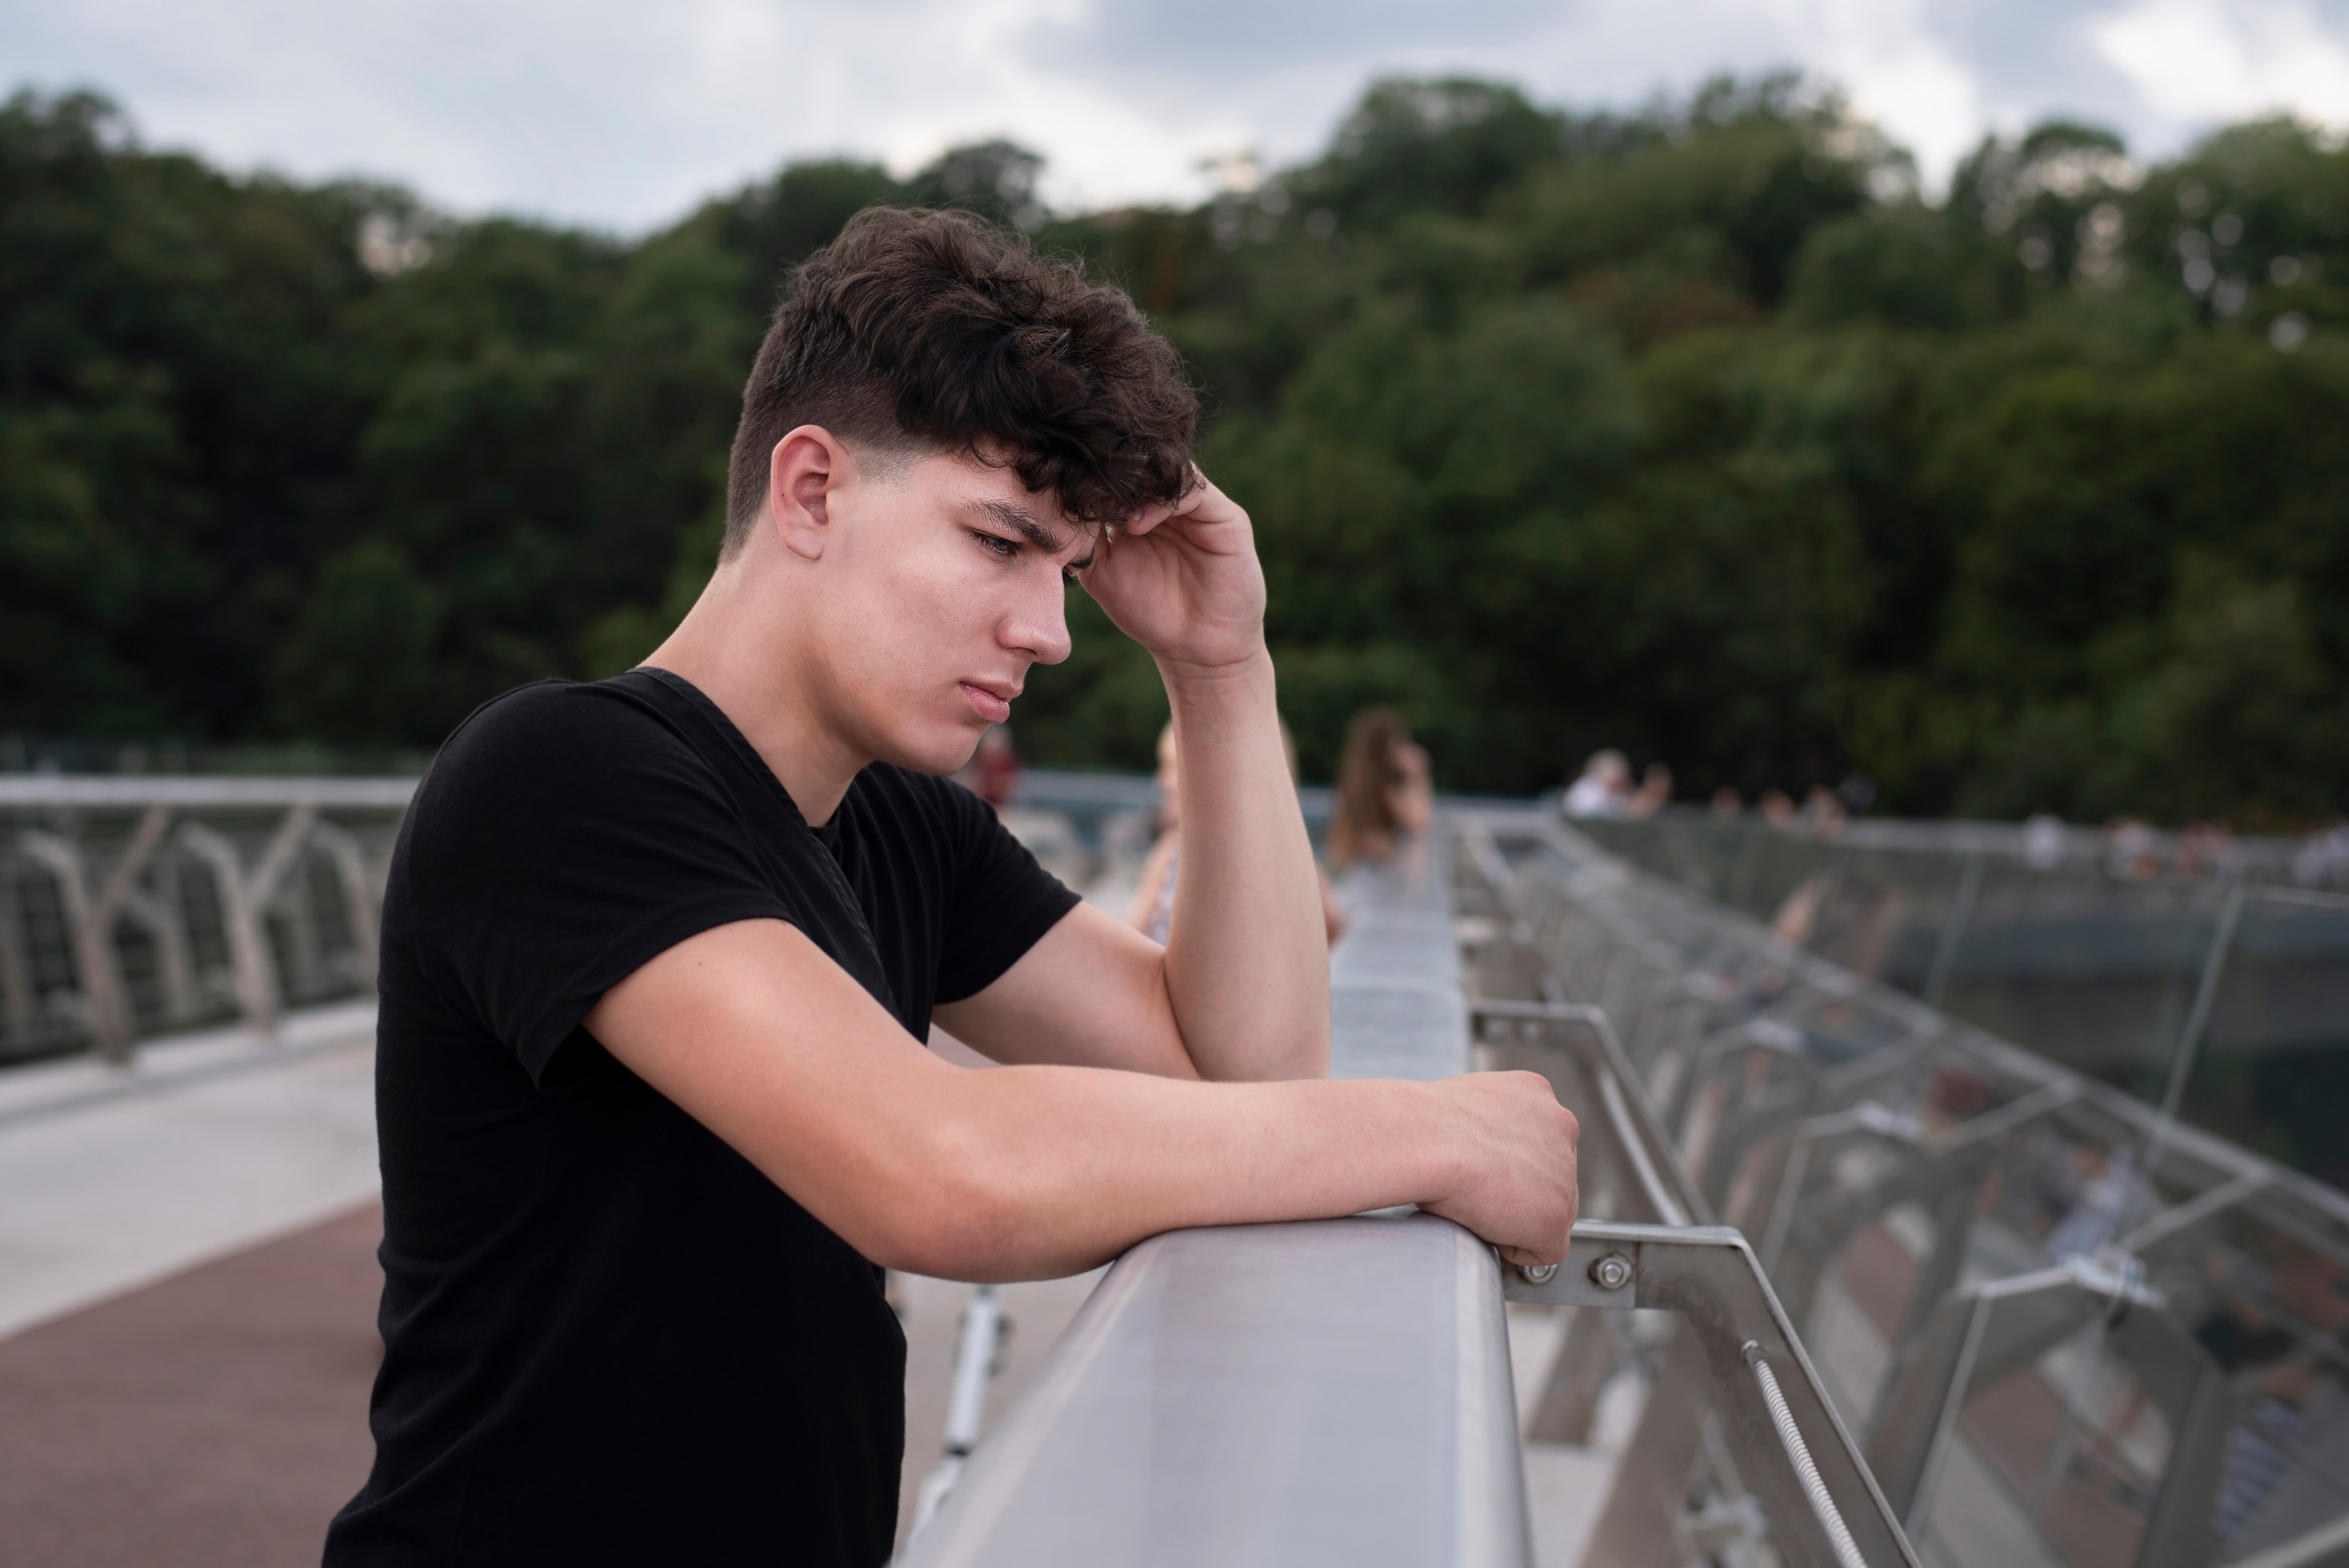 A sad teenage boy standing on a bridge overlooking a river | Source: Shutterstock